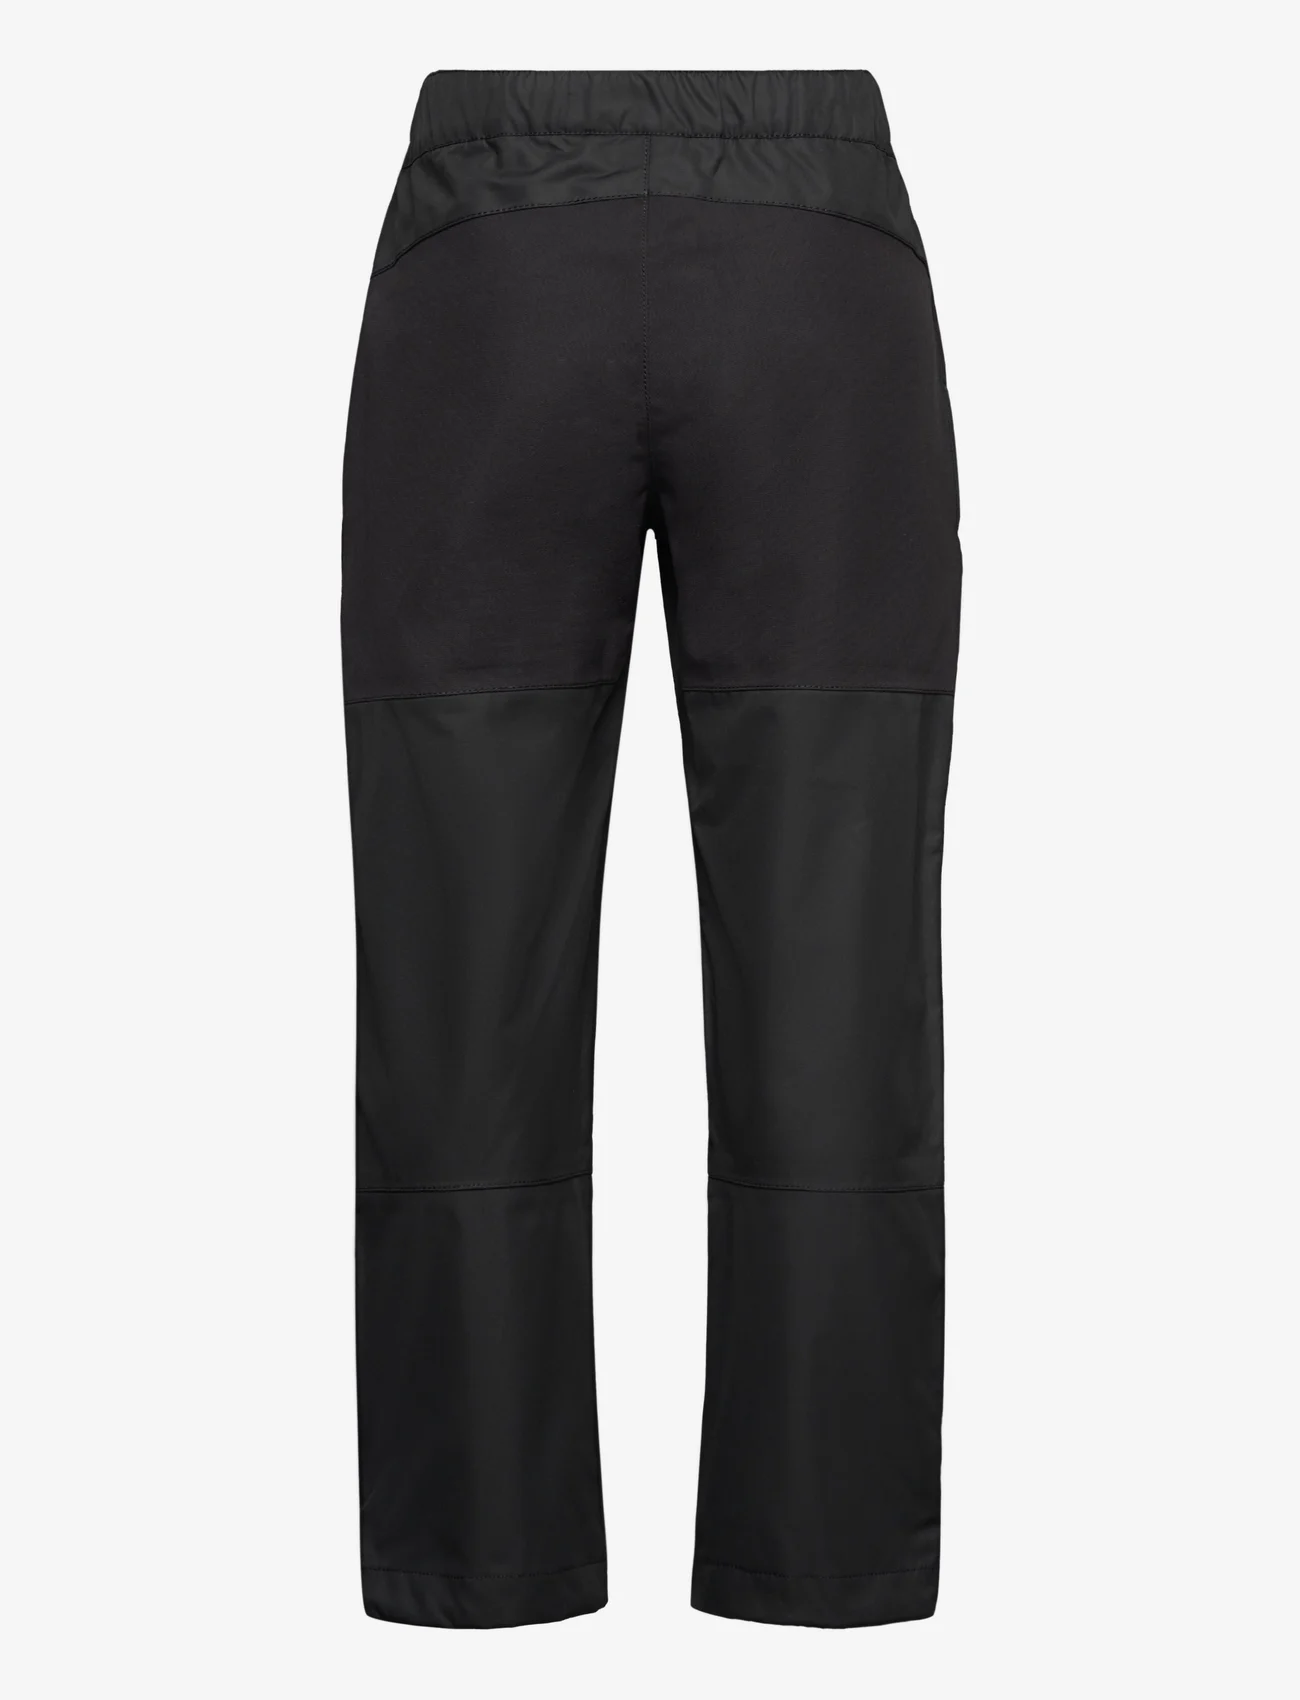 Reima - Reimatec pants, Lento - nederdelar - black - 1